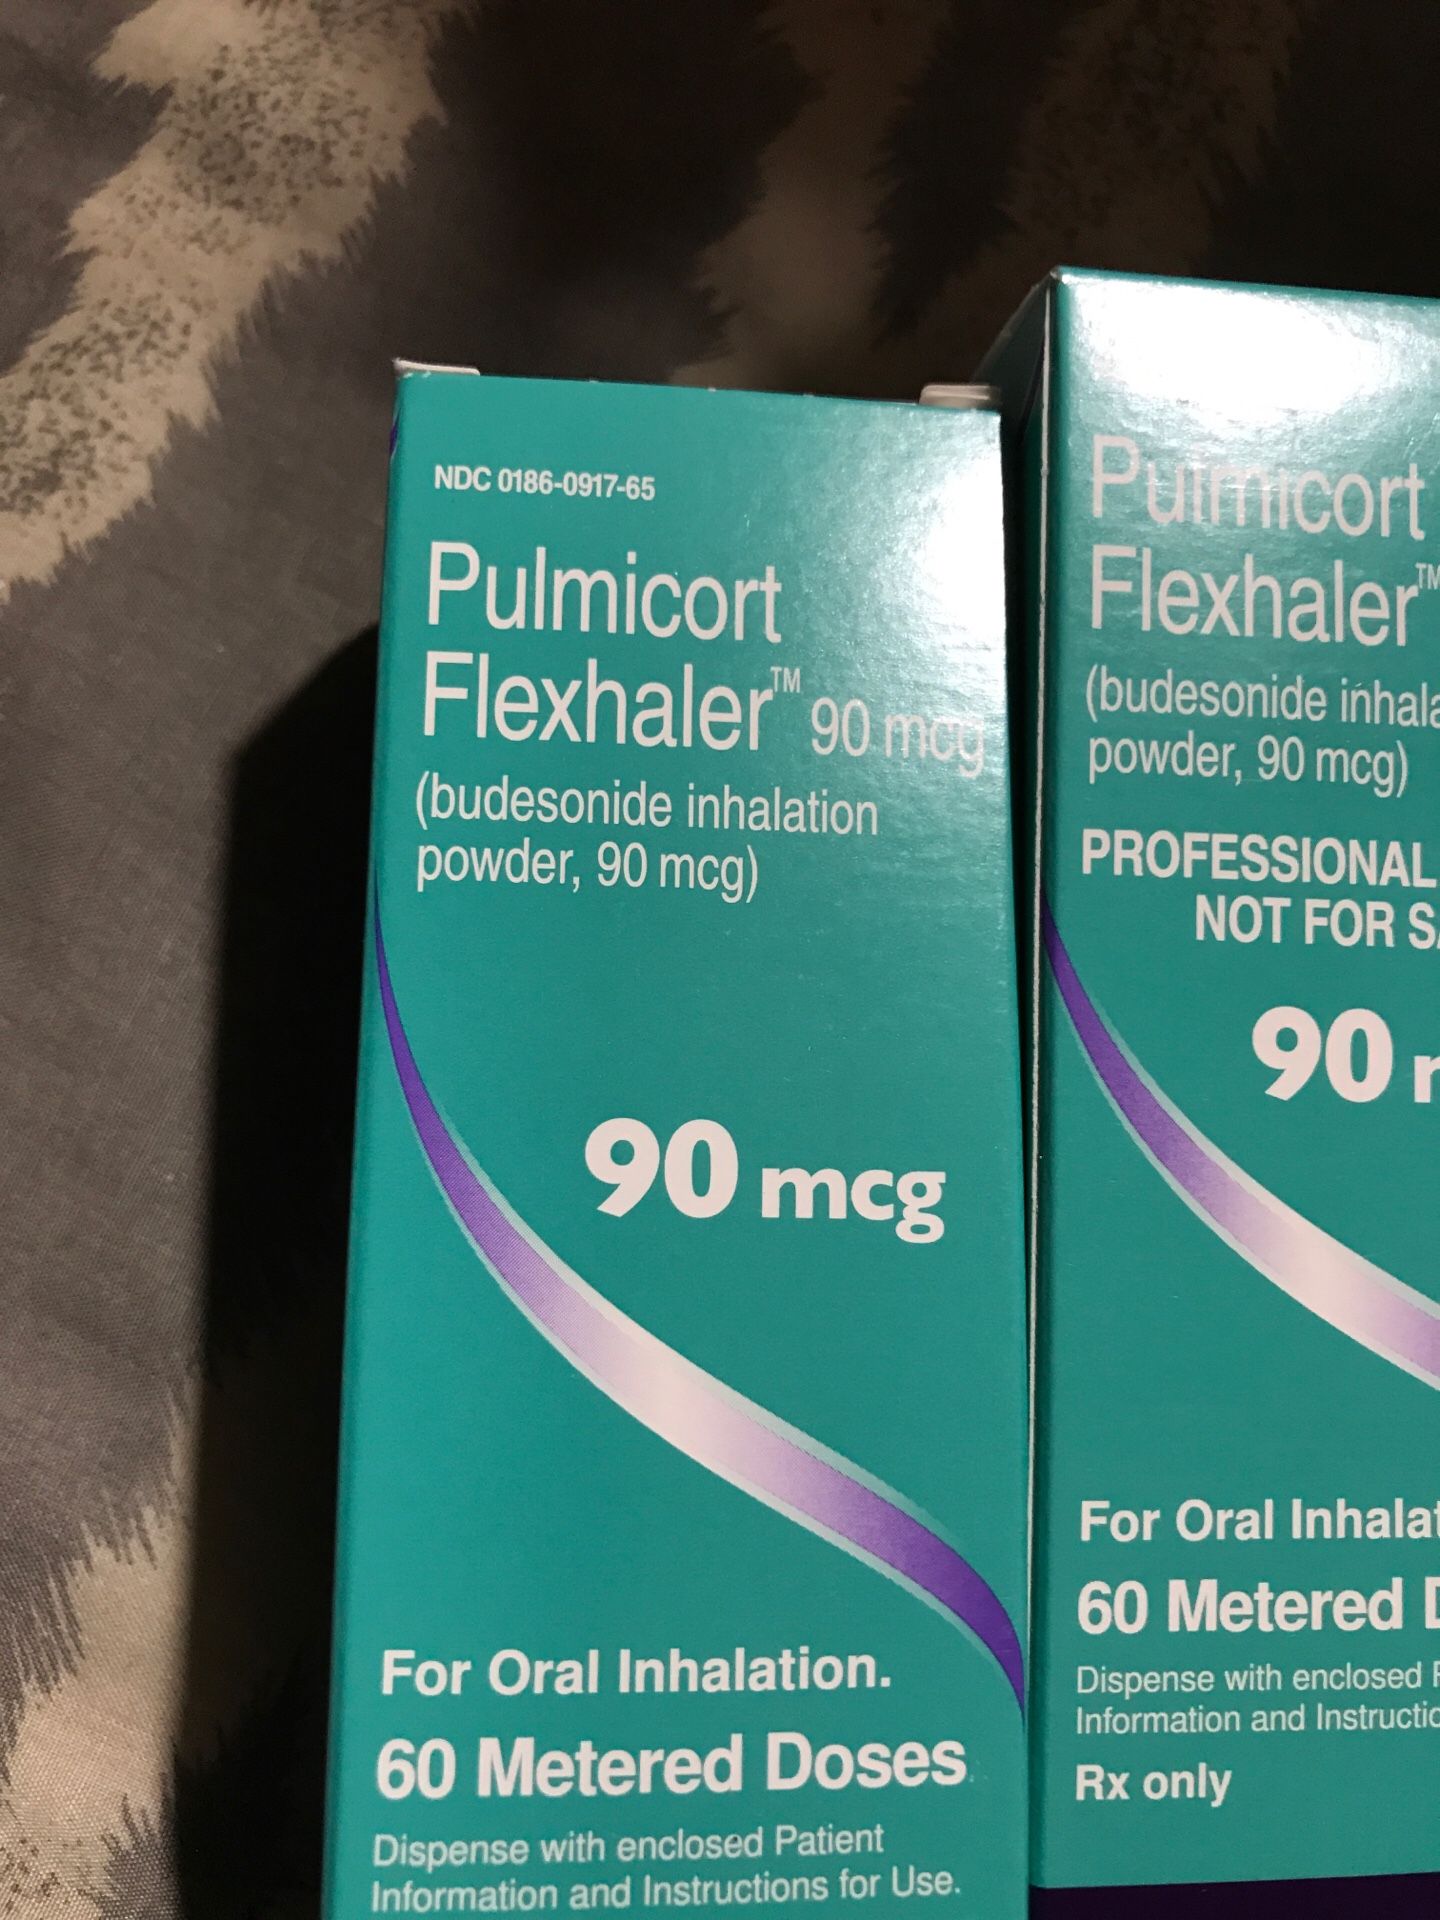 Pulmicort flexhaler 90 mcg 60 Metered doses